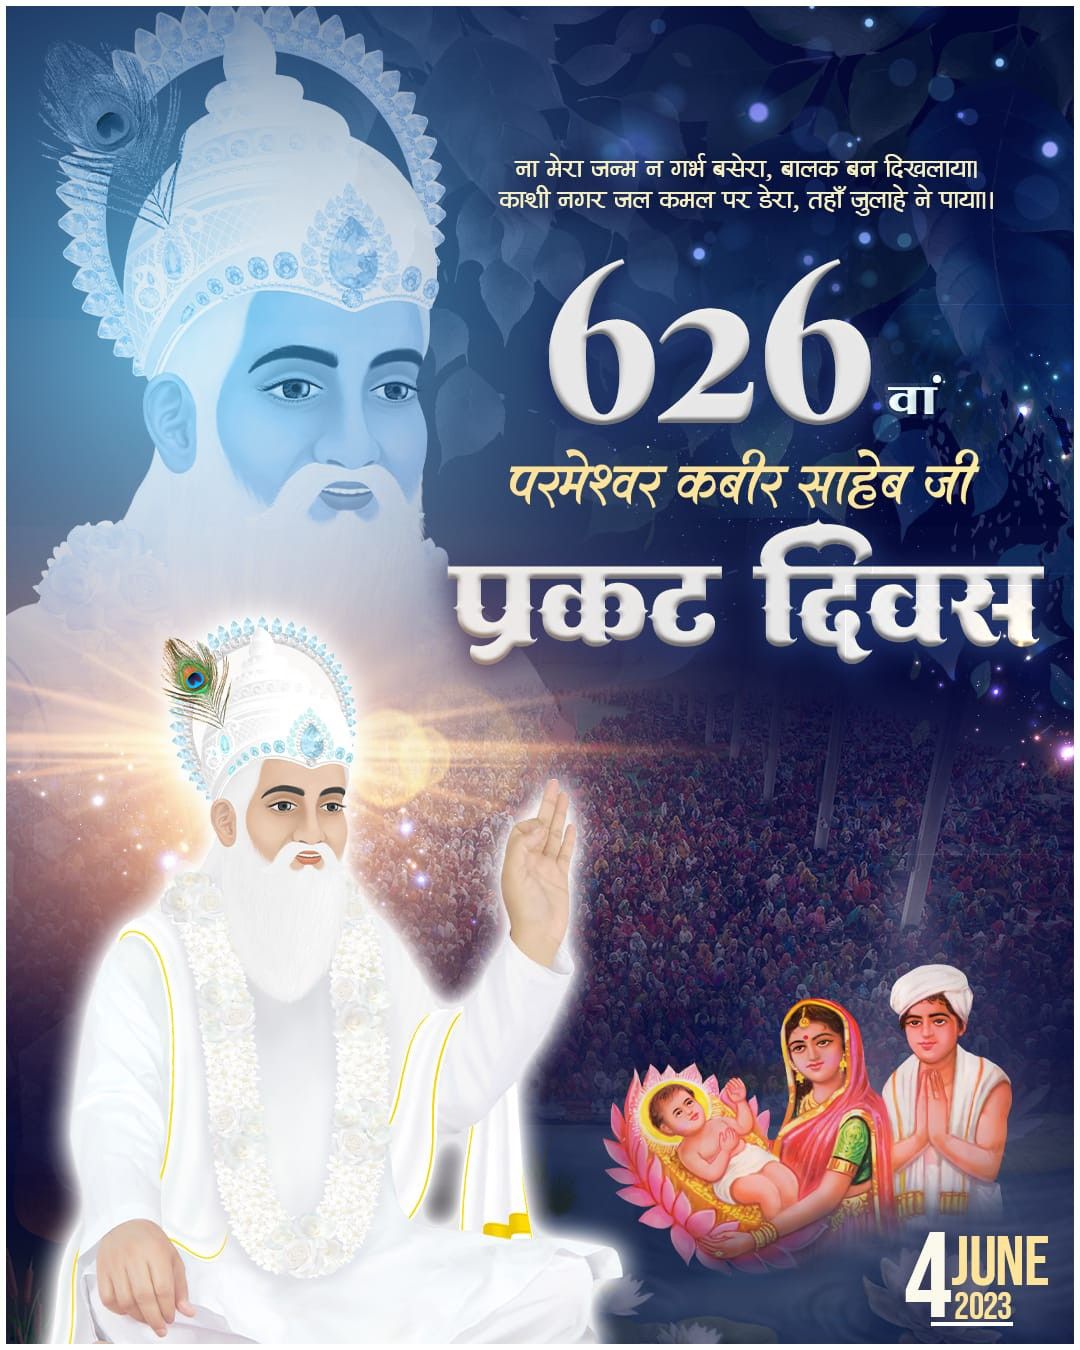 Kabir Parmeshwar Ji’s 626th Prakat Diwas || Event Celebration HD Wallpaper